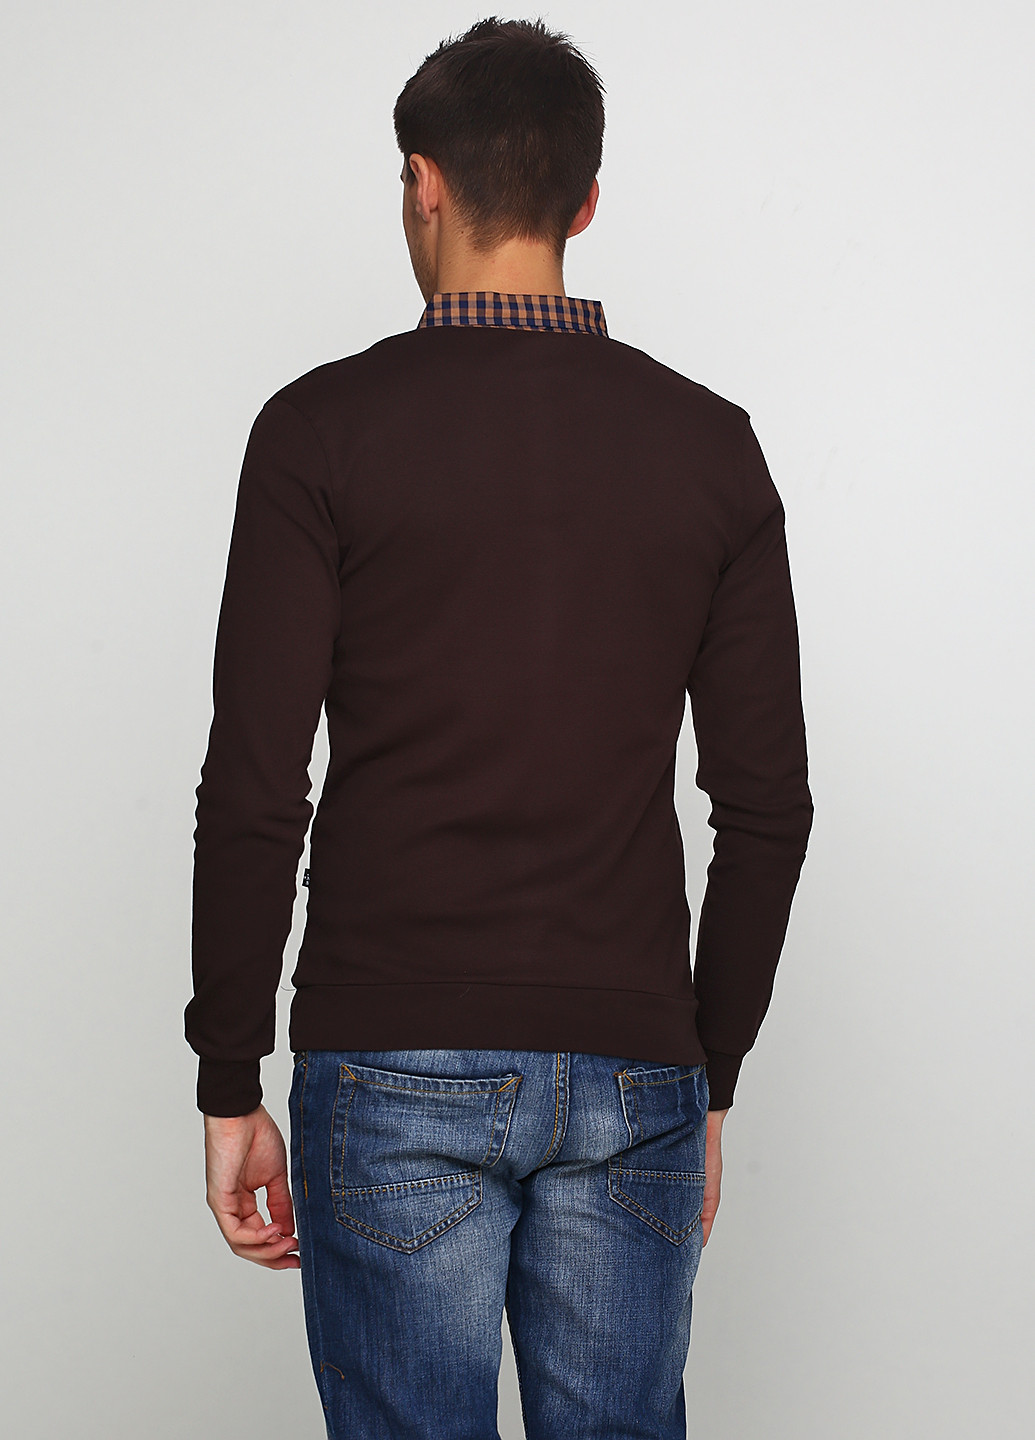 Коричневый демисезонный пуловер пуловер MSY